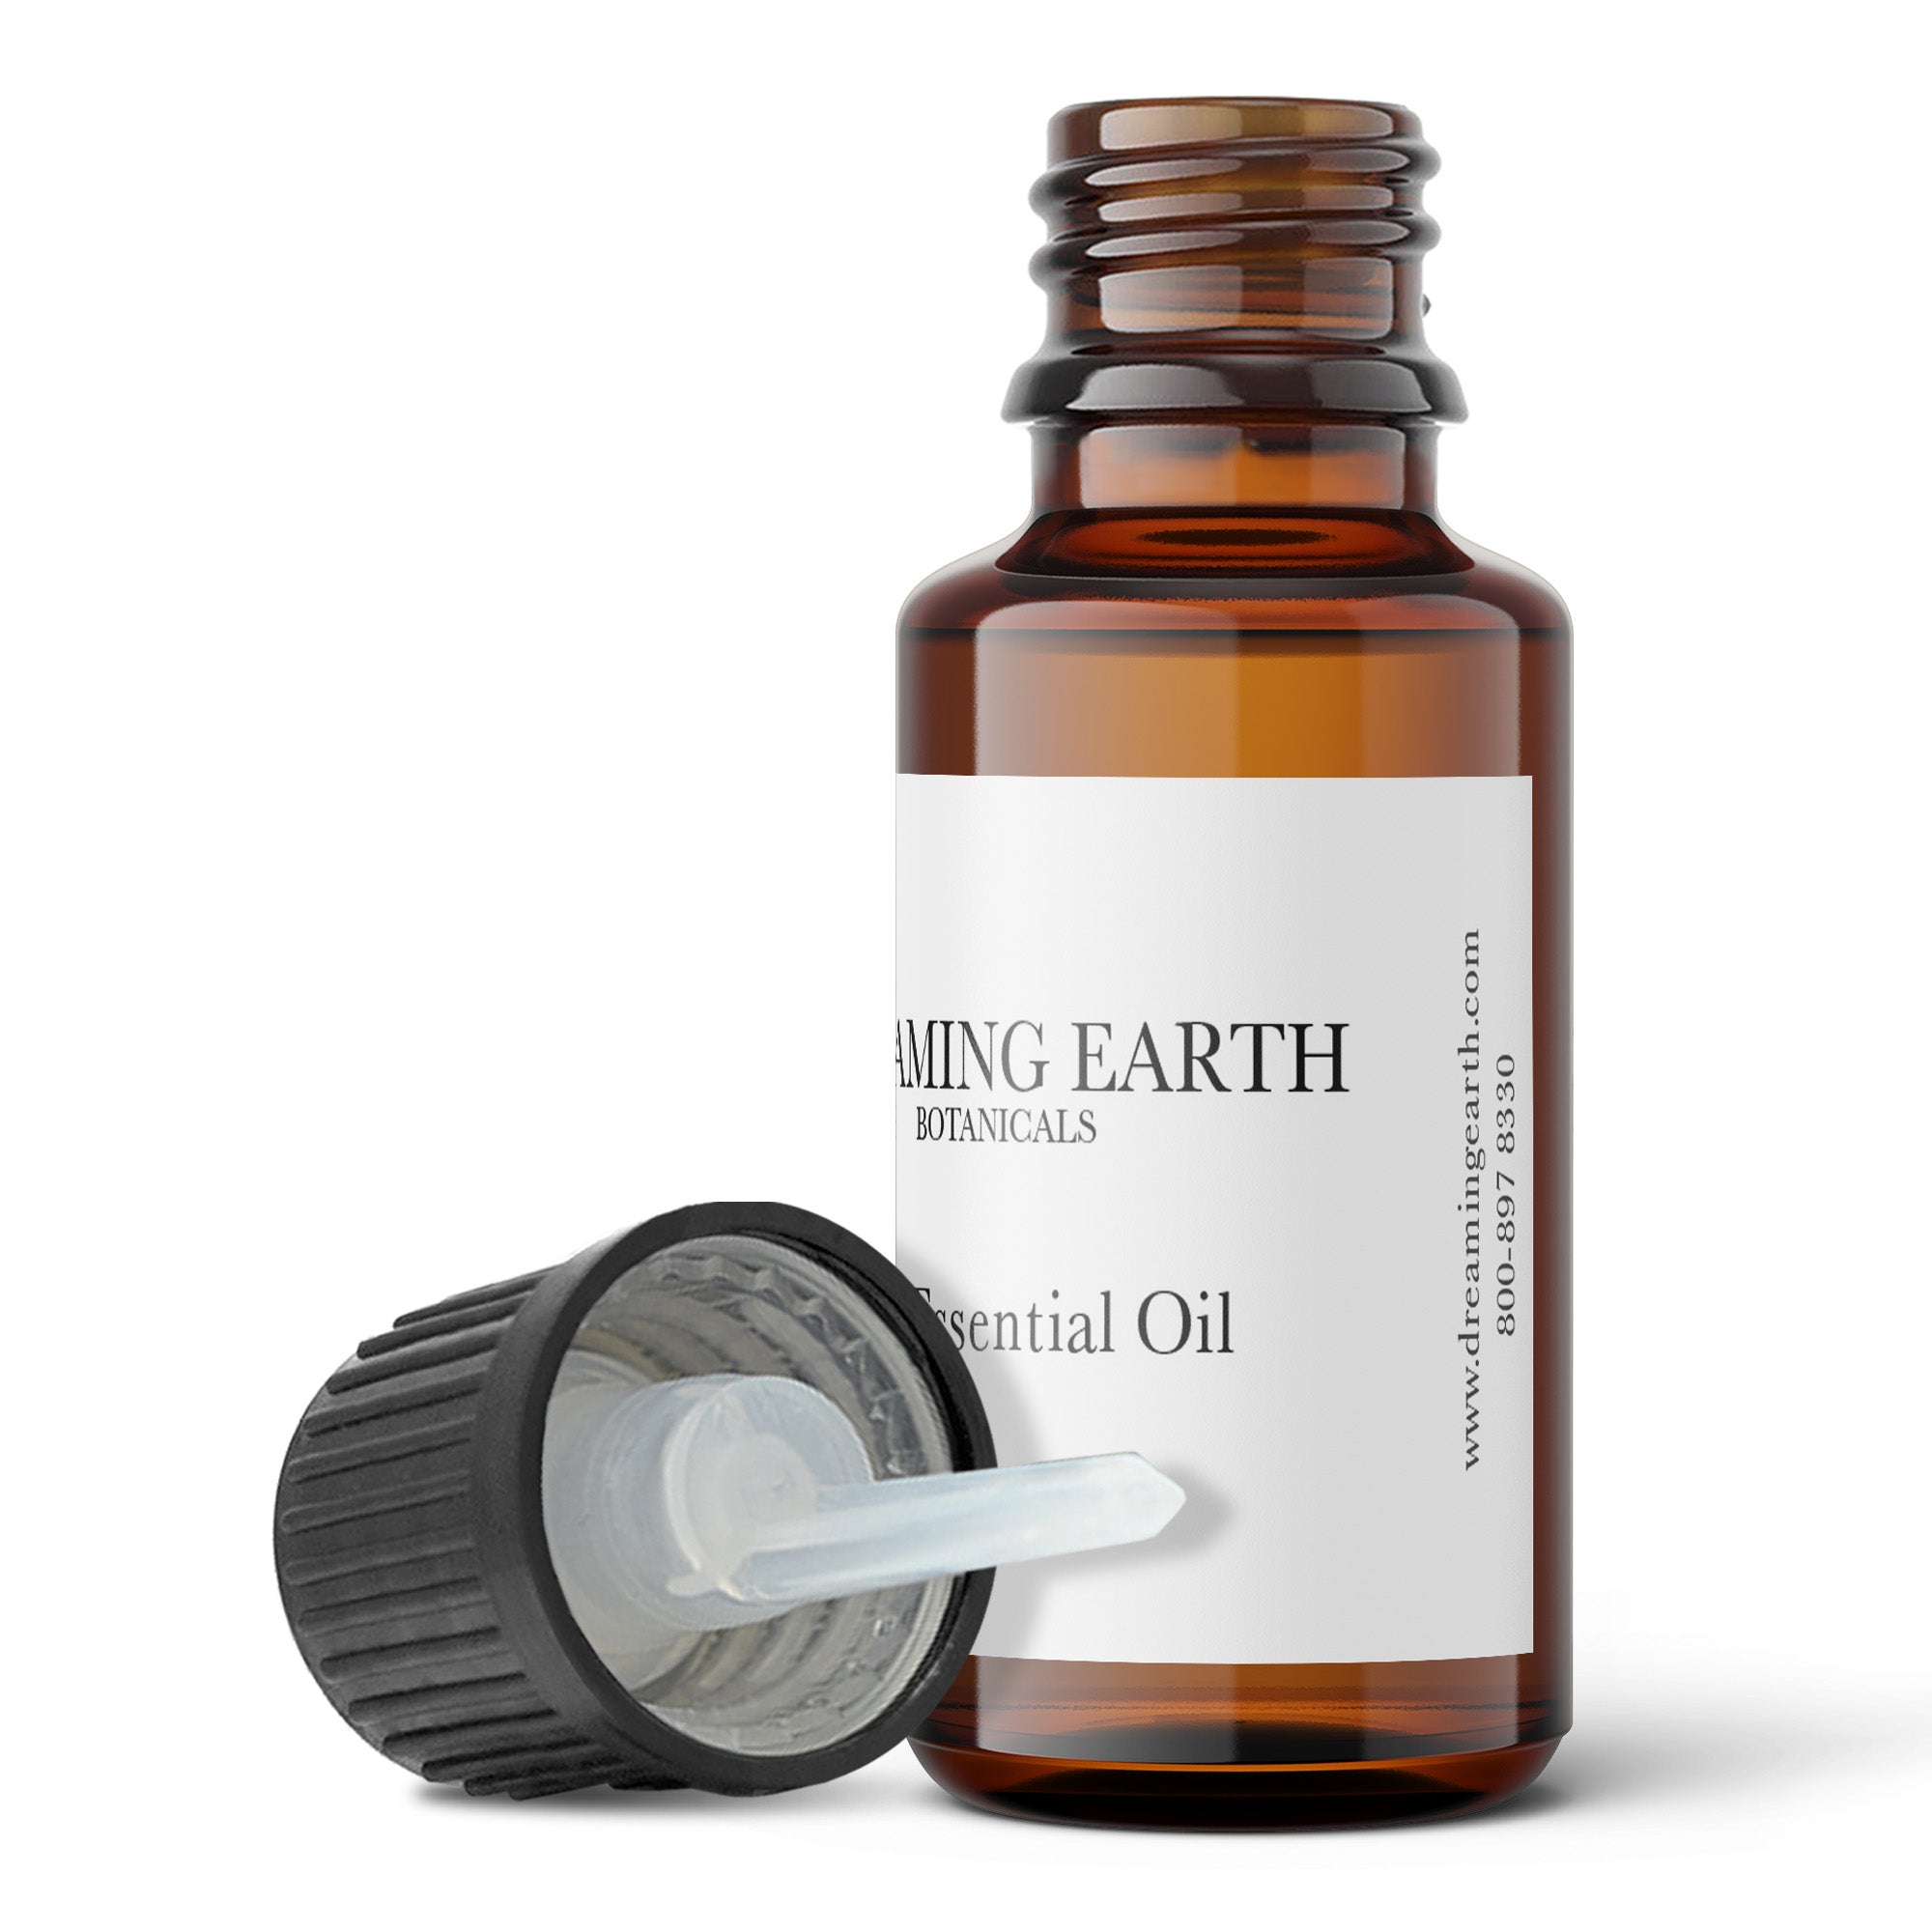 Fraser Fir Essential Oil  Blue Ridge Aromatics – Handcrafted Essential Oils